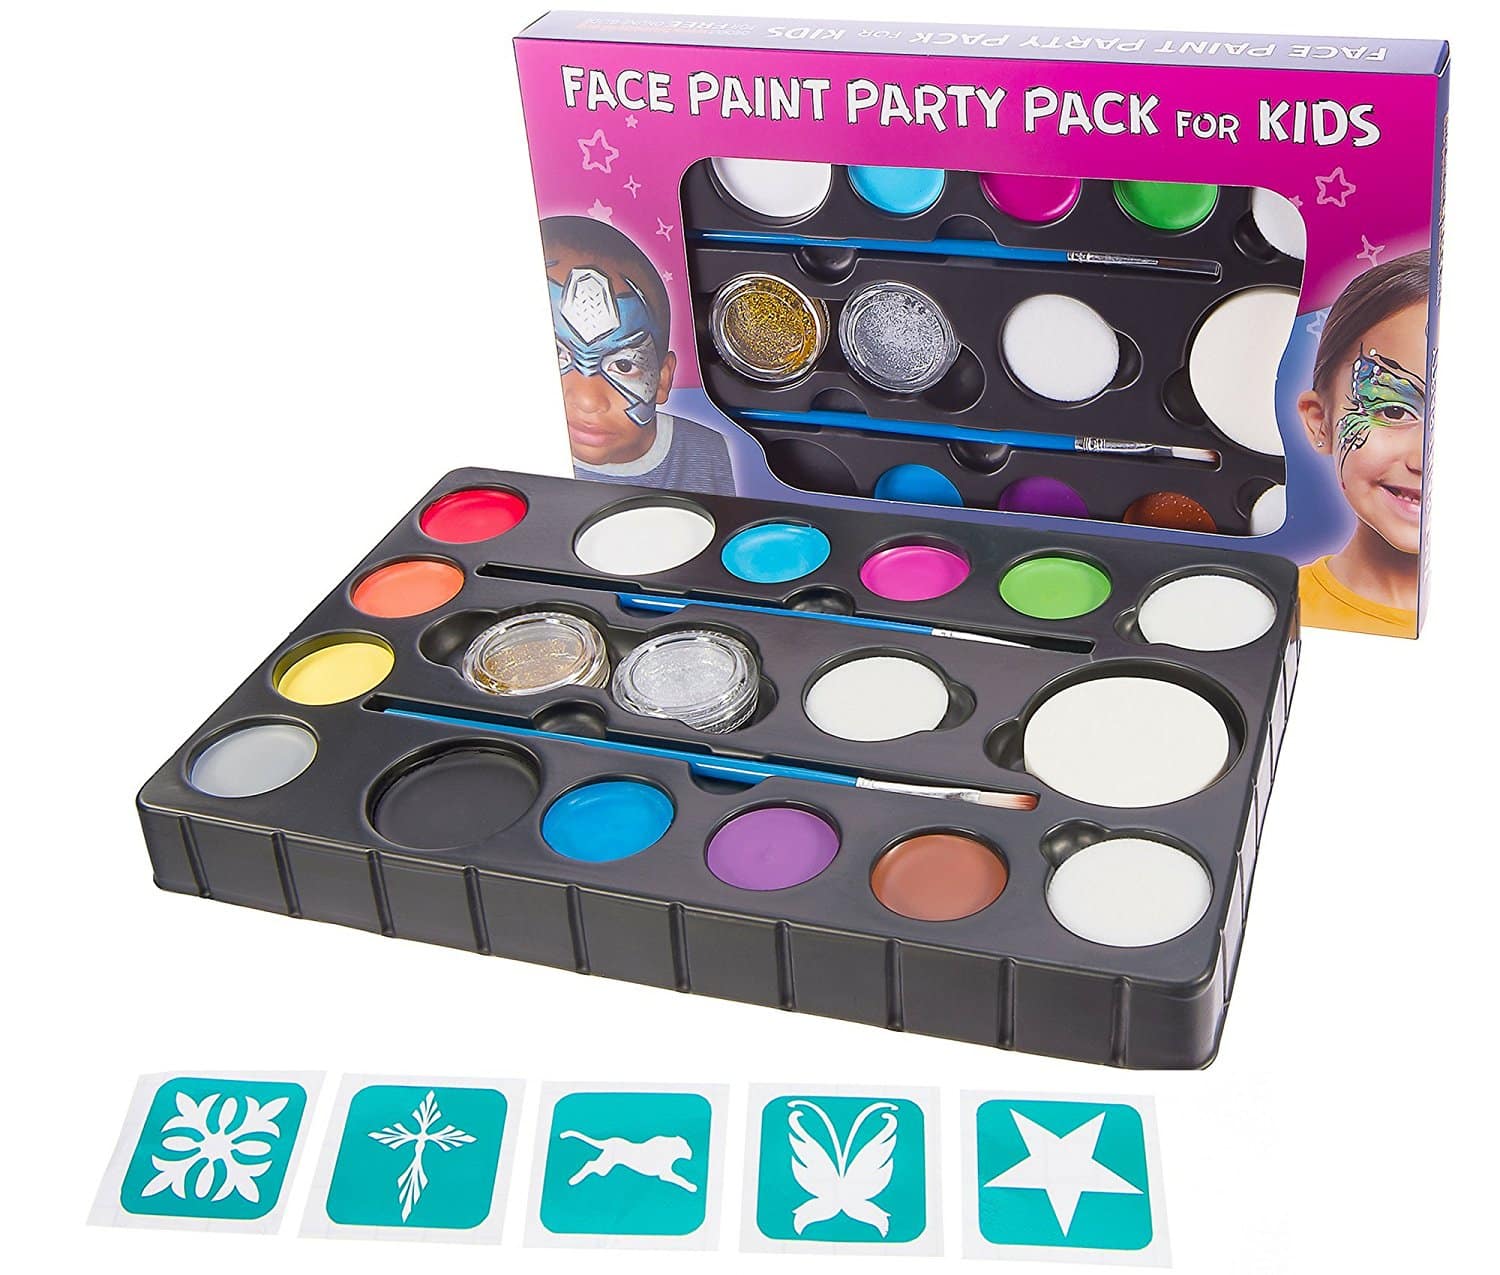 LIGHTNING DEAL ALERT! Face Paint for Kids XL Party Pack – 74% off!